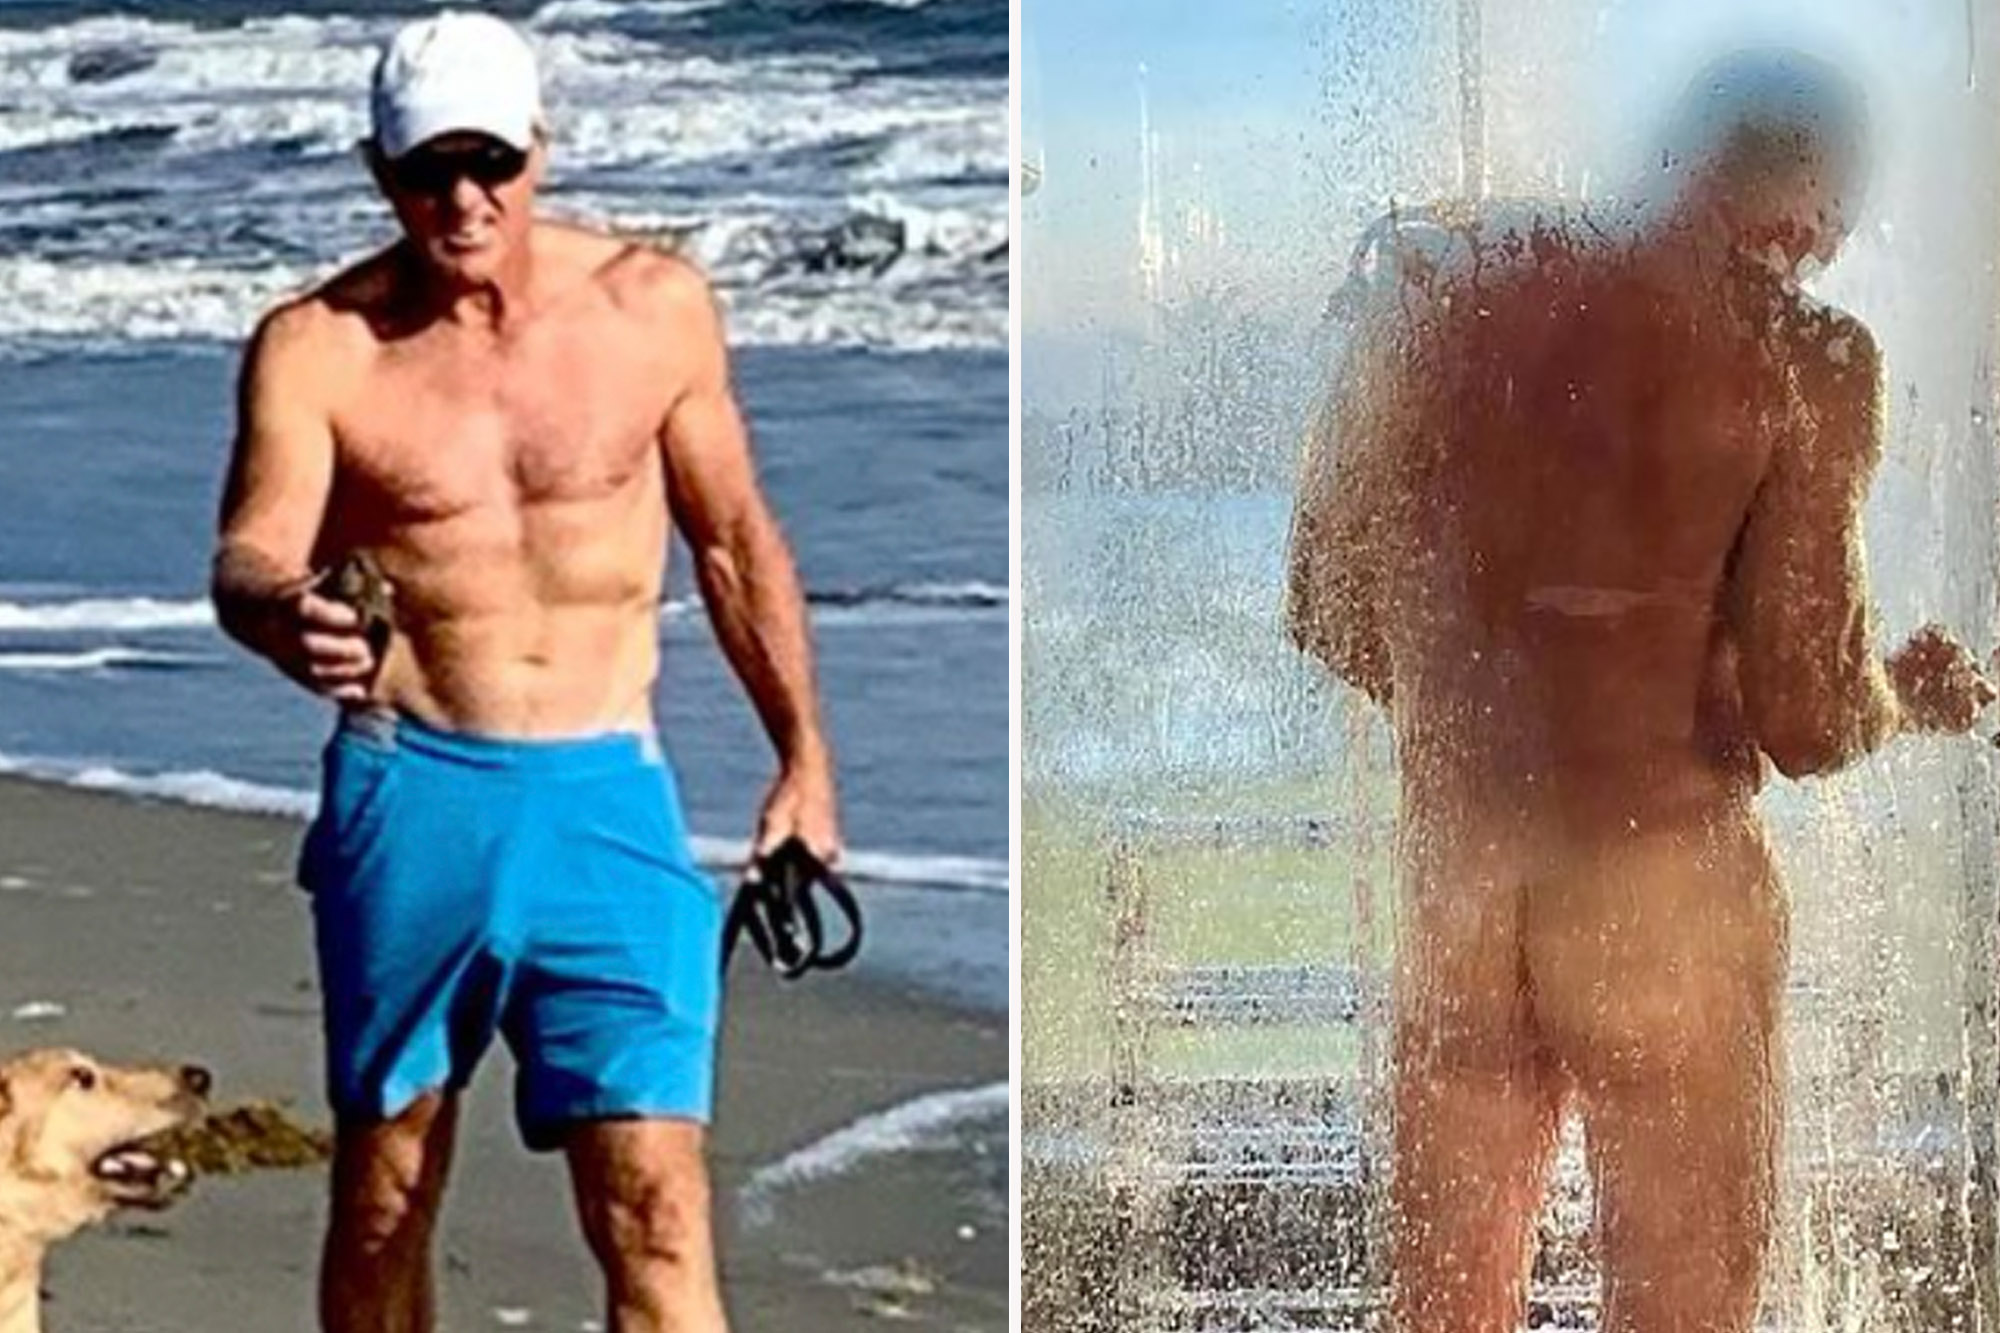 al iverson share nude beach huge dick photos